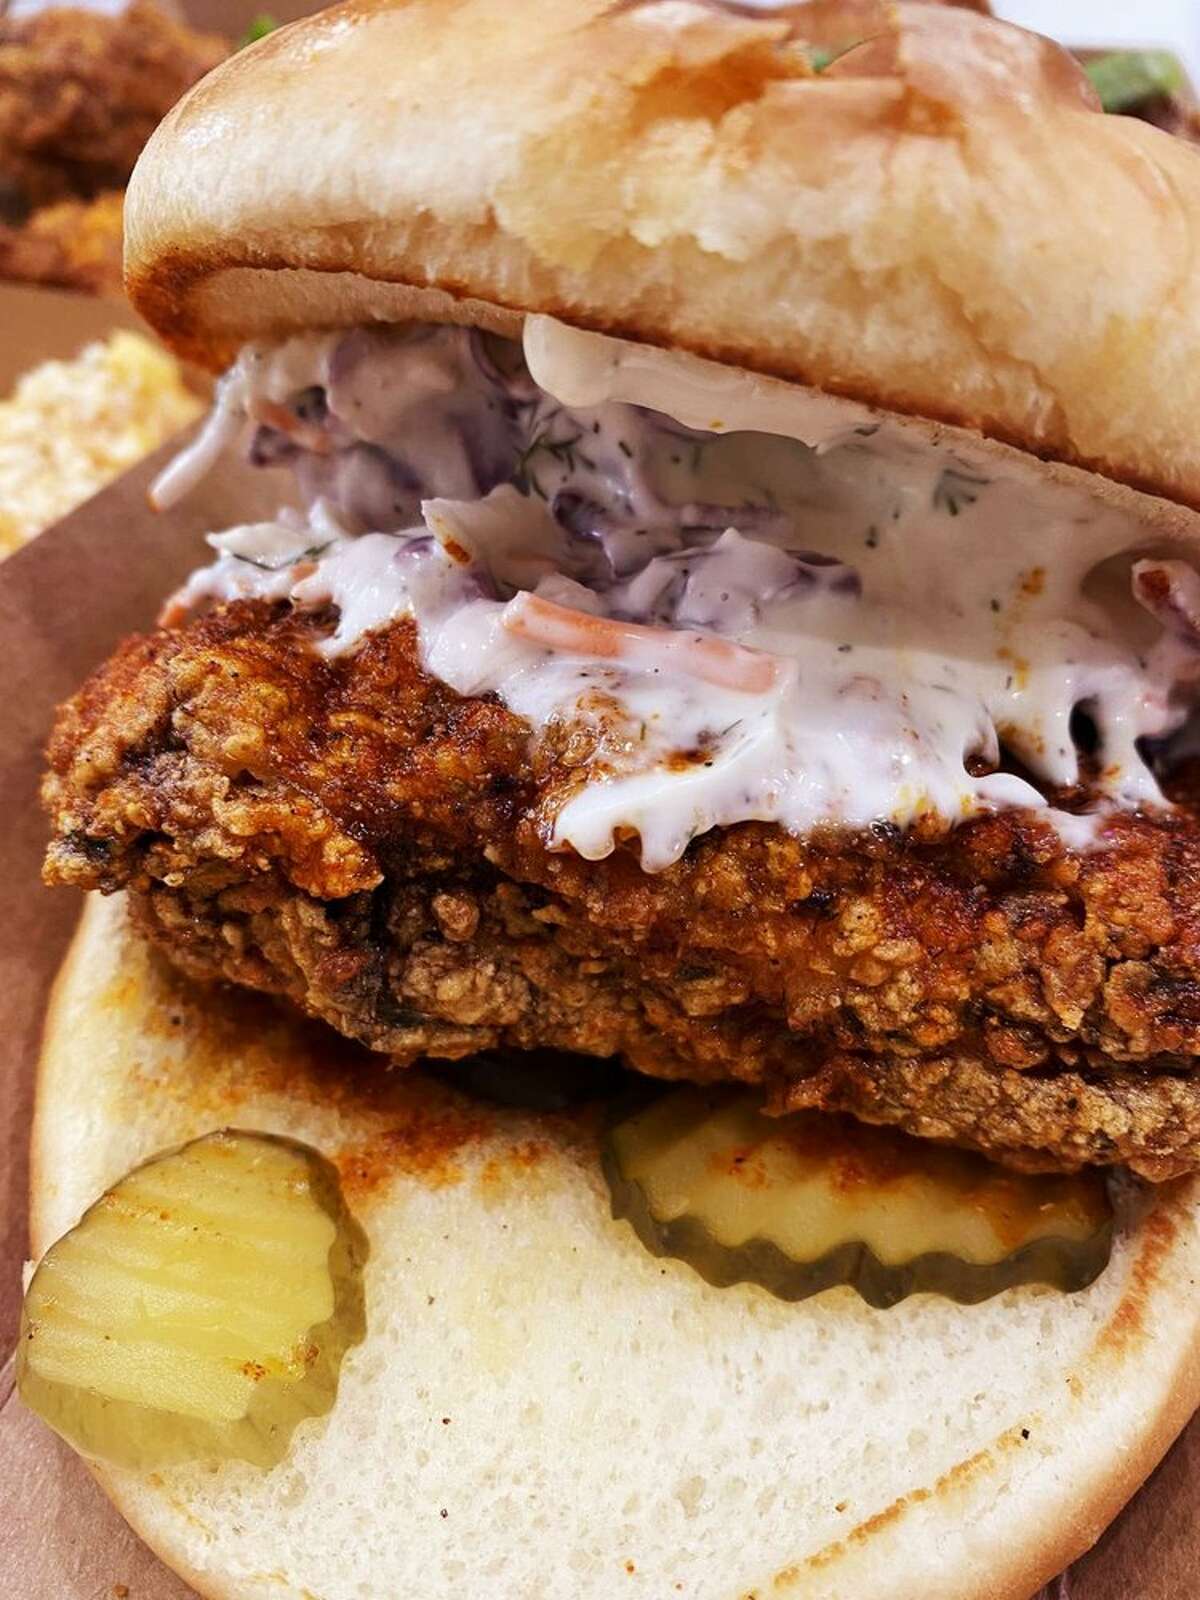 Sticky's Chicken's Nashville hot chicken sandwich is a mouthful.